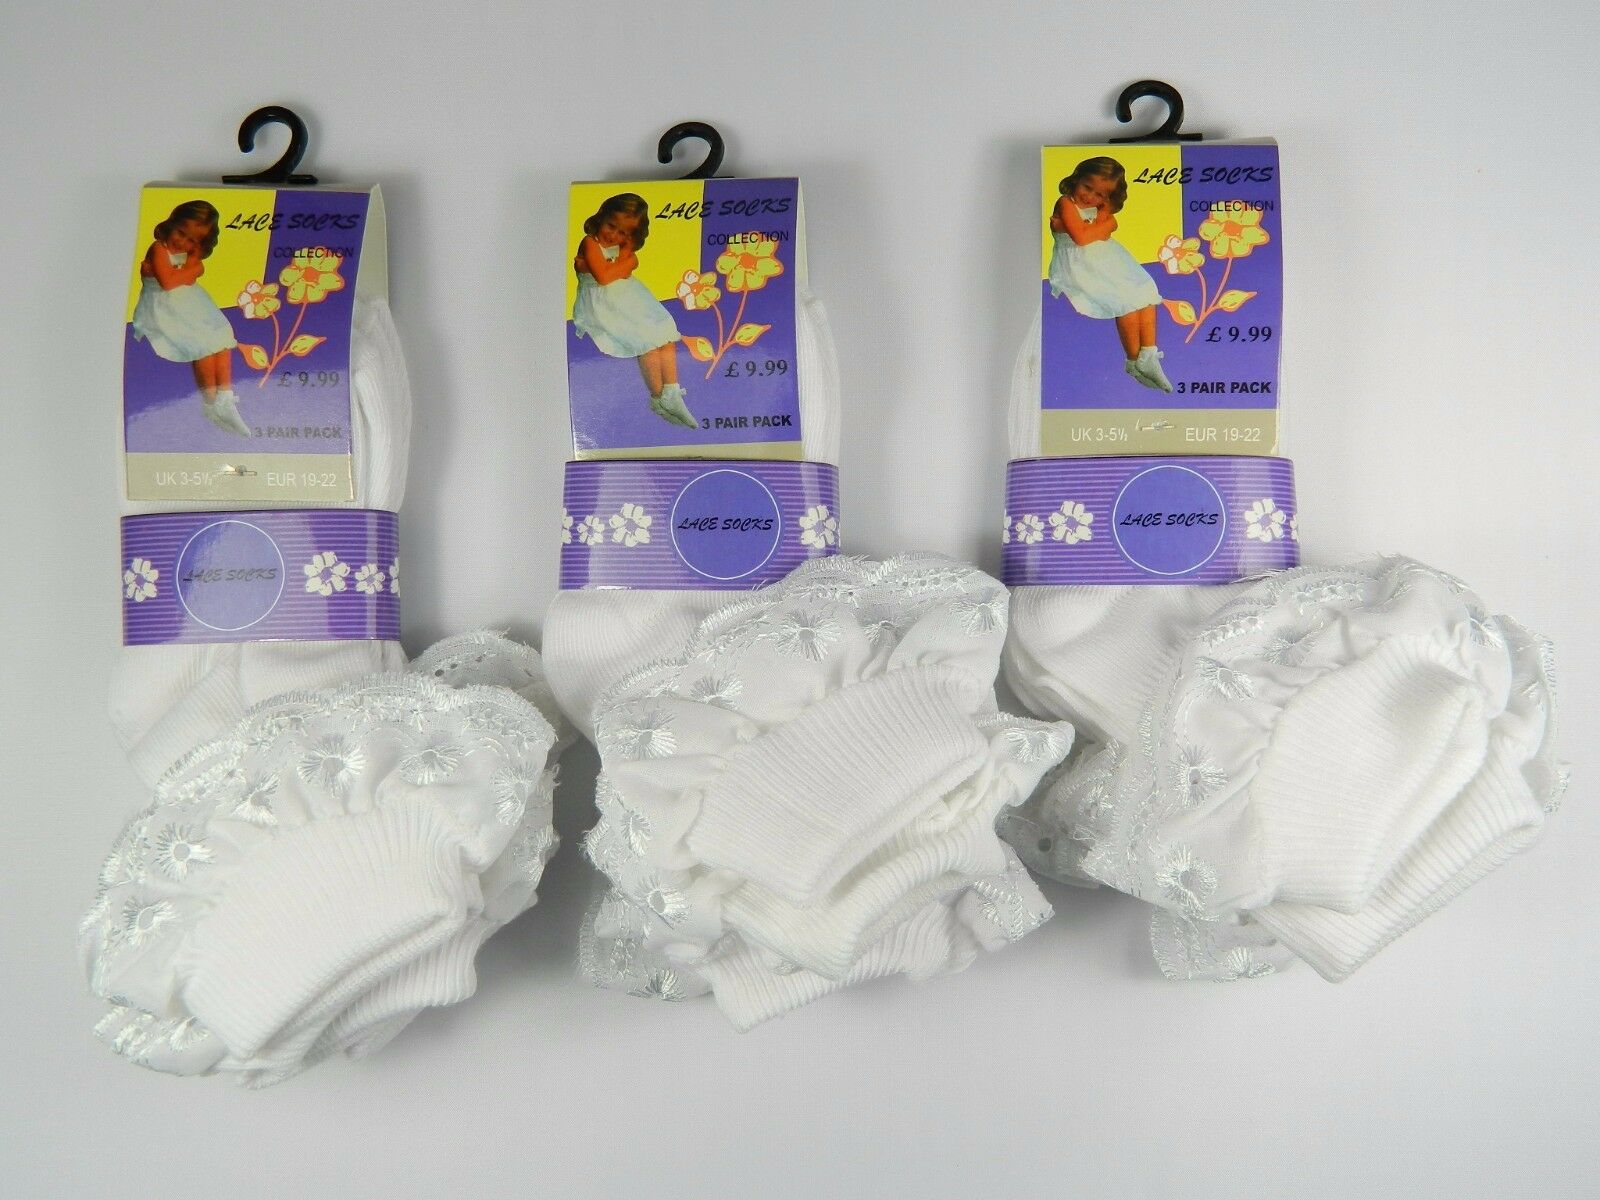 White Lace Frill Socks Girls Kids Children Soft Polycotton Comfortable 6 Pairs